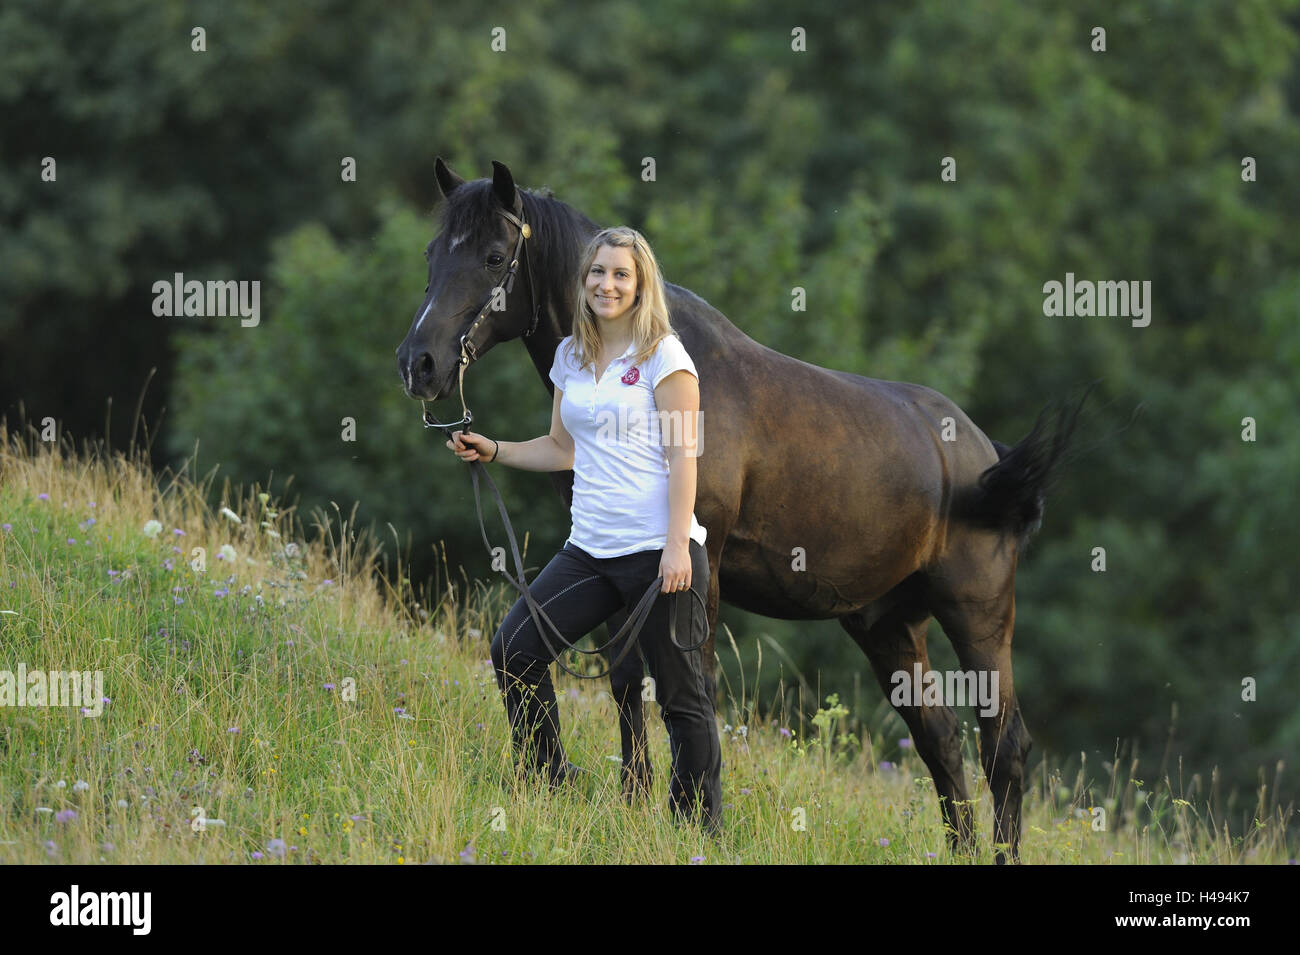 Teenage girl, horse, Arabo-Haflinger, meadow, stand, view camera, Stock Photo